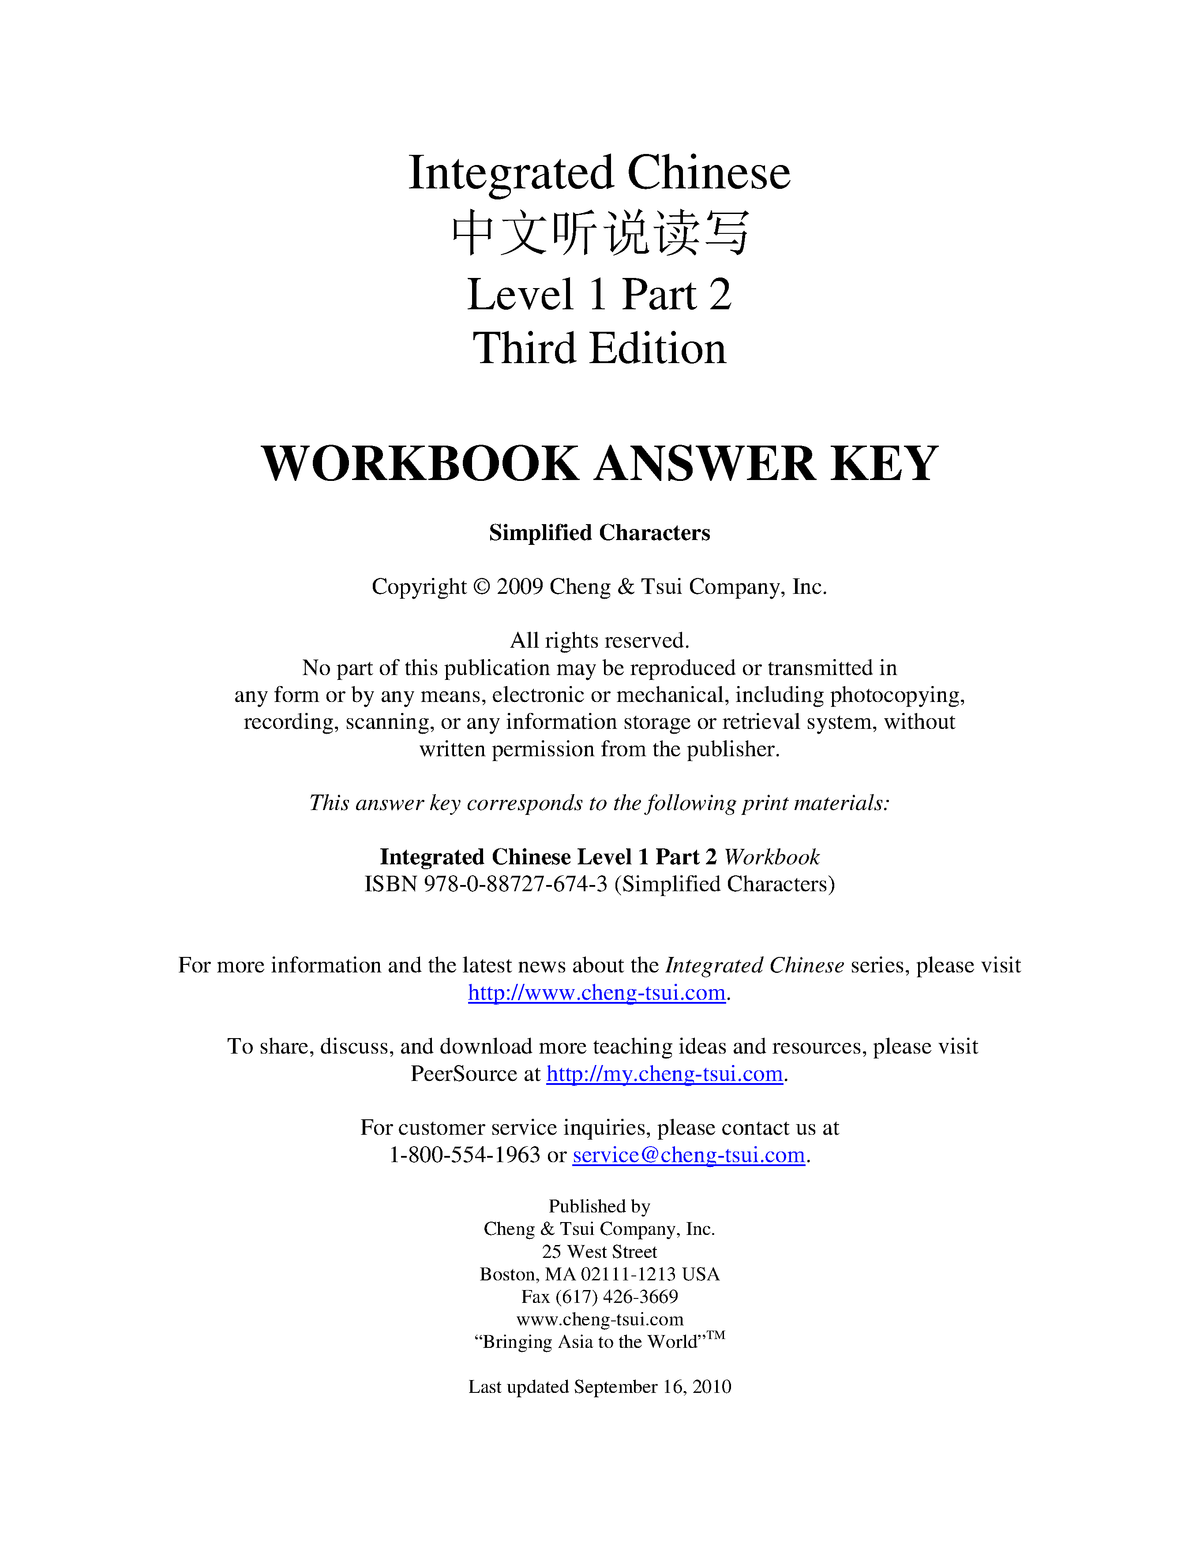 Liu yuehua integrated chinese workbook answer key simplified StuDocu